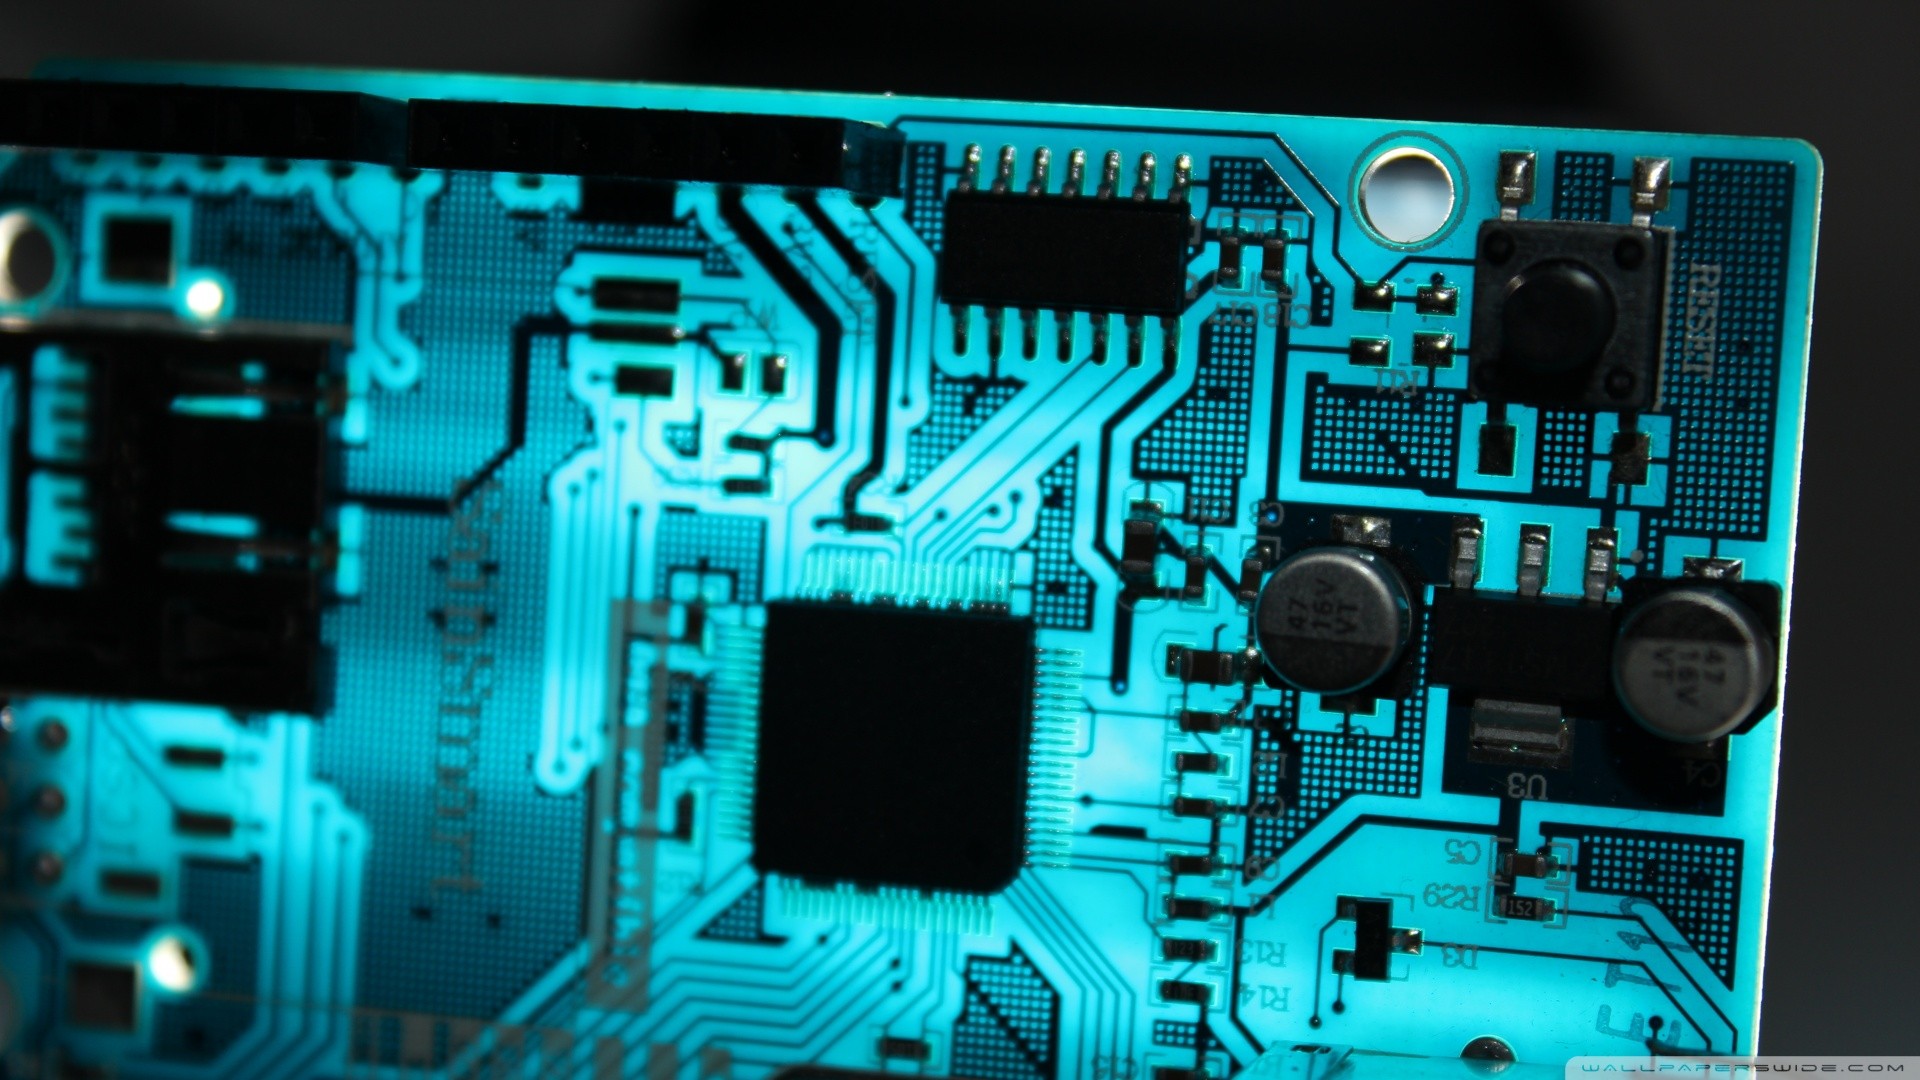 General 1920x1080 electronics technology cyan turquoise circuit boards macro hardware